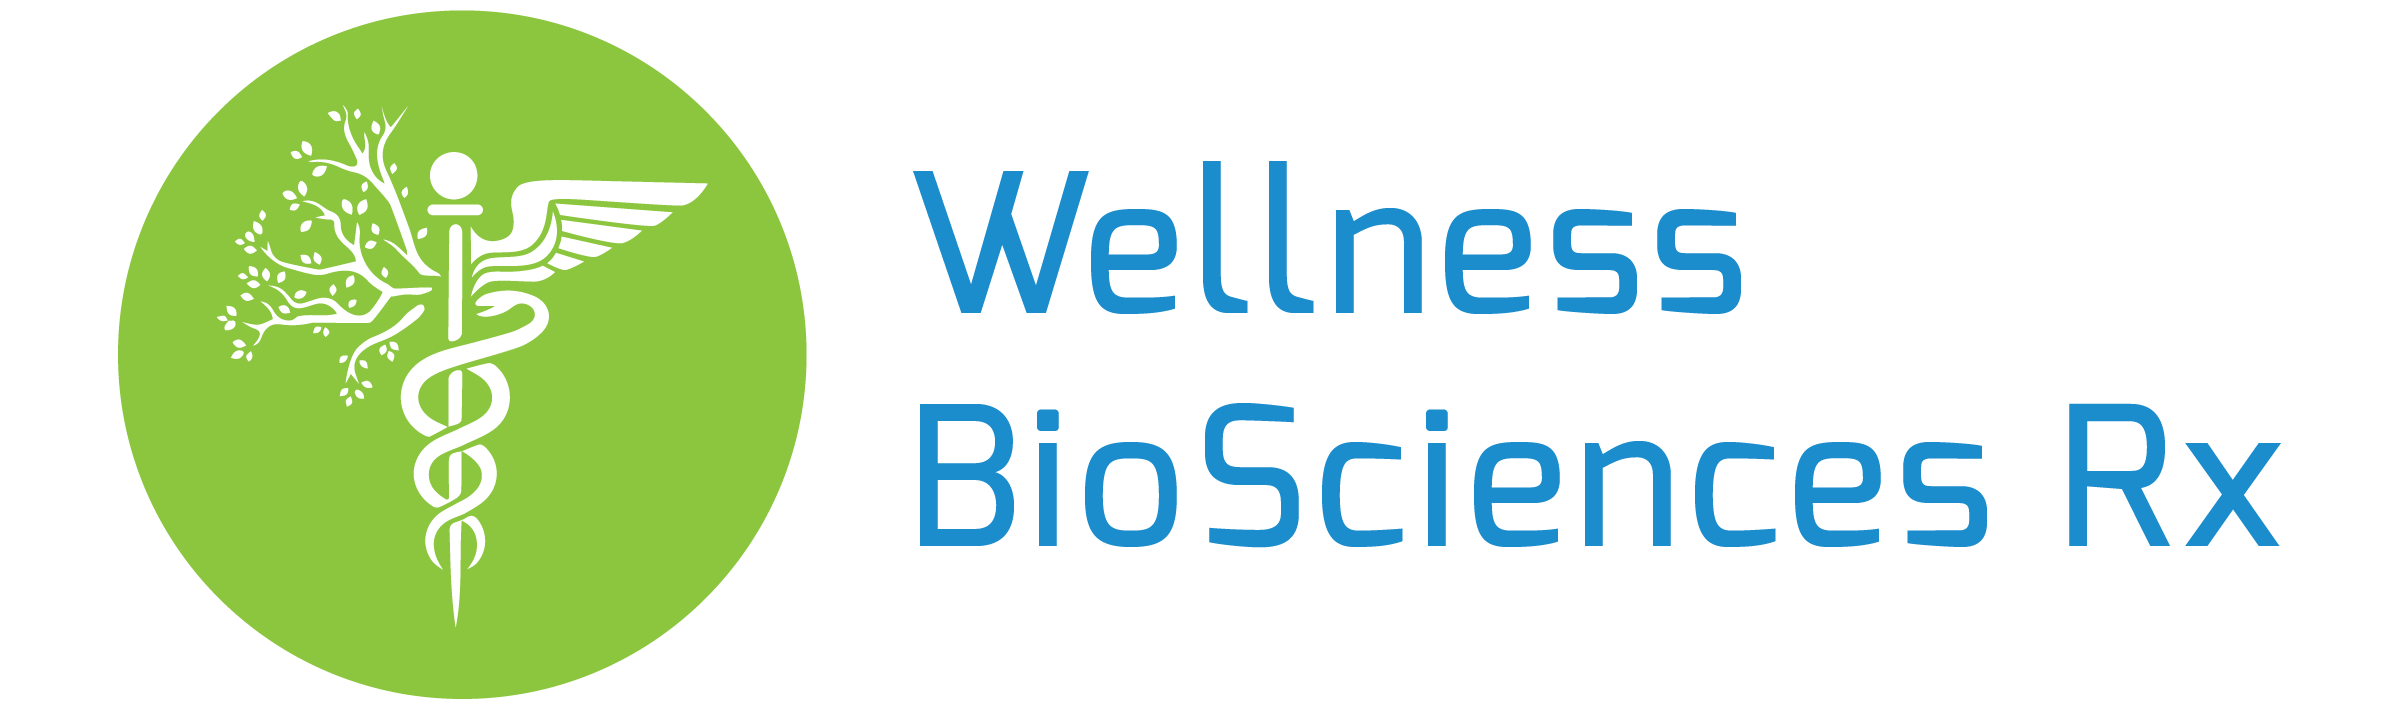 wellness biosciences rx logo